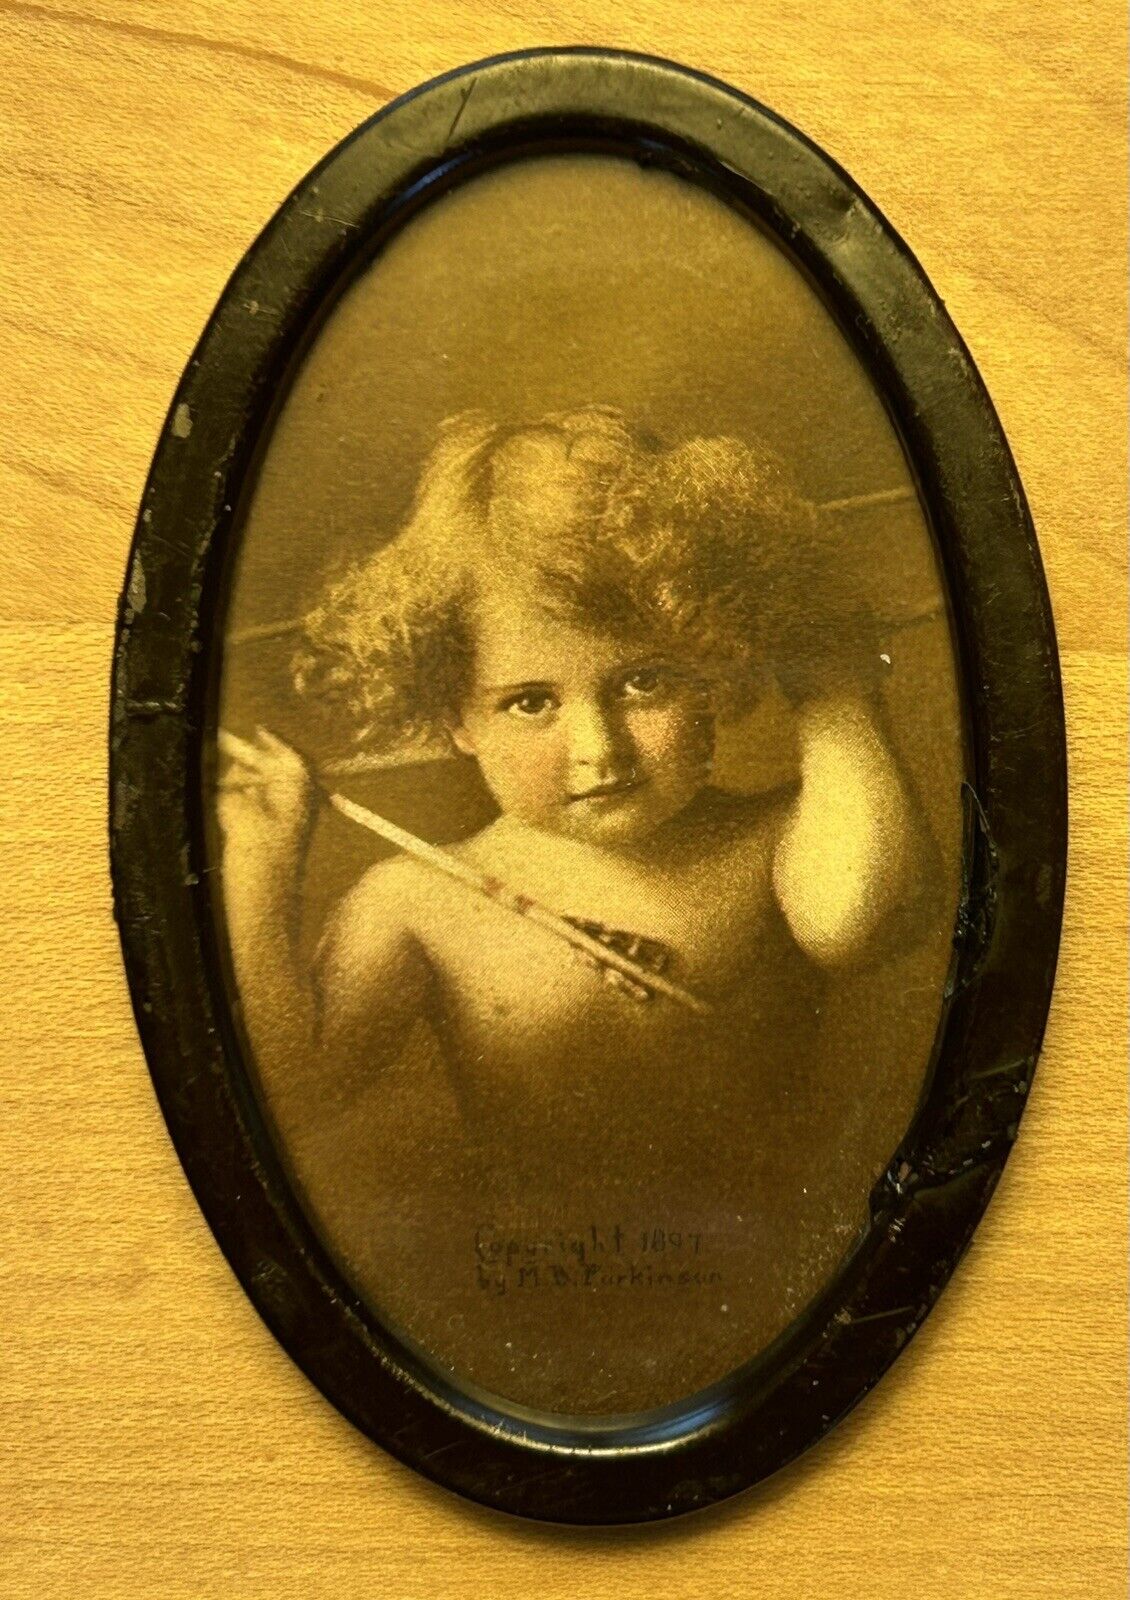 Antique Cupid Awake 1897 M B Parkinson Print Metal Frame 3 1/4” x 2 1/4”